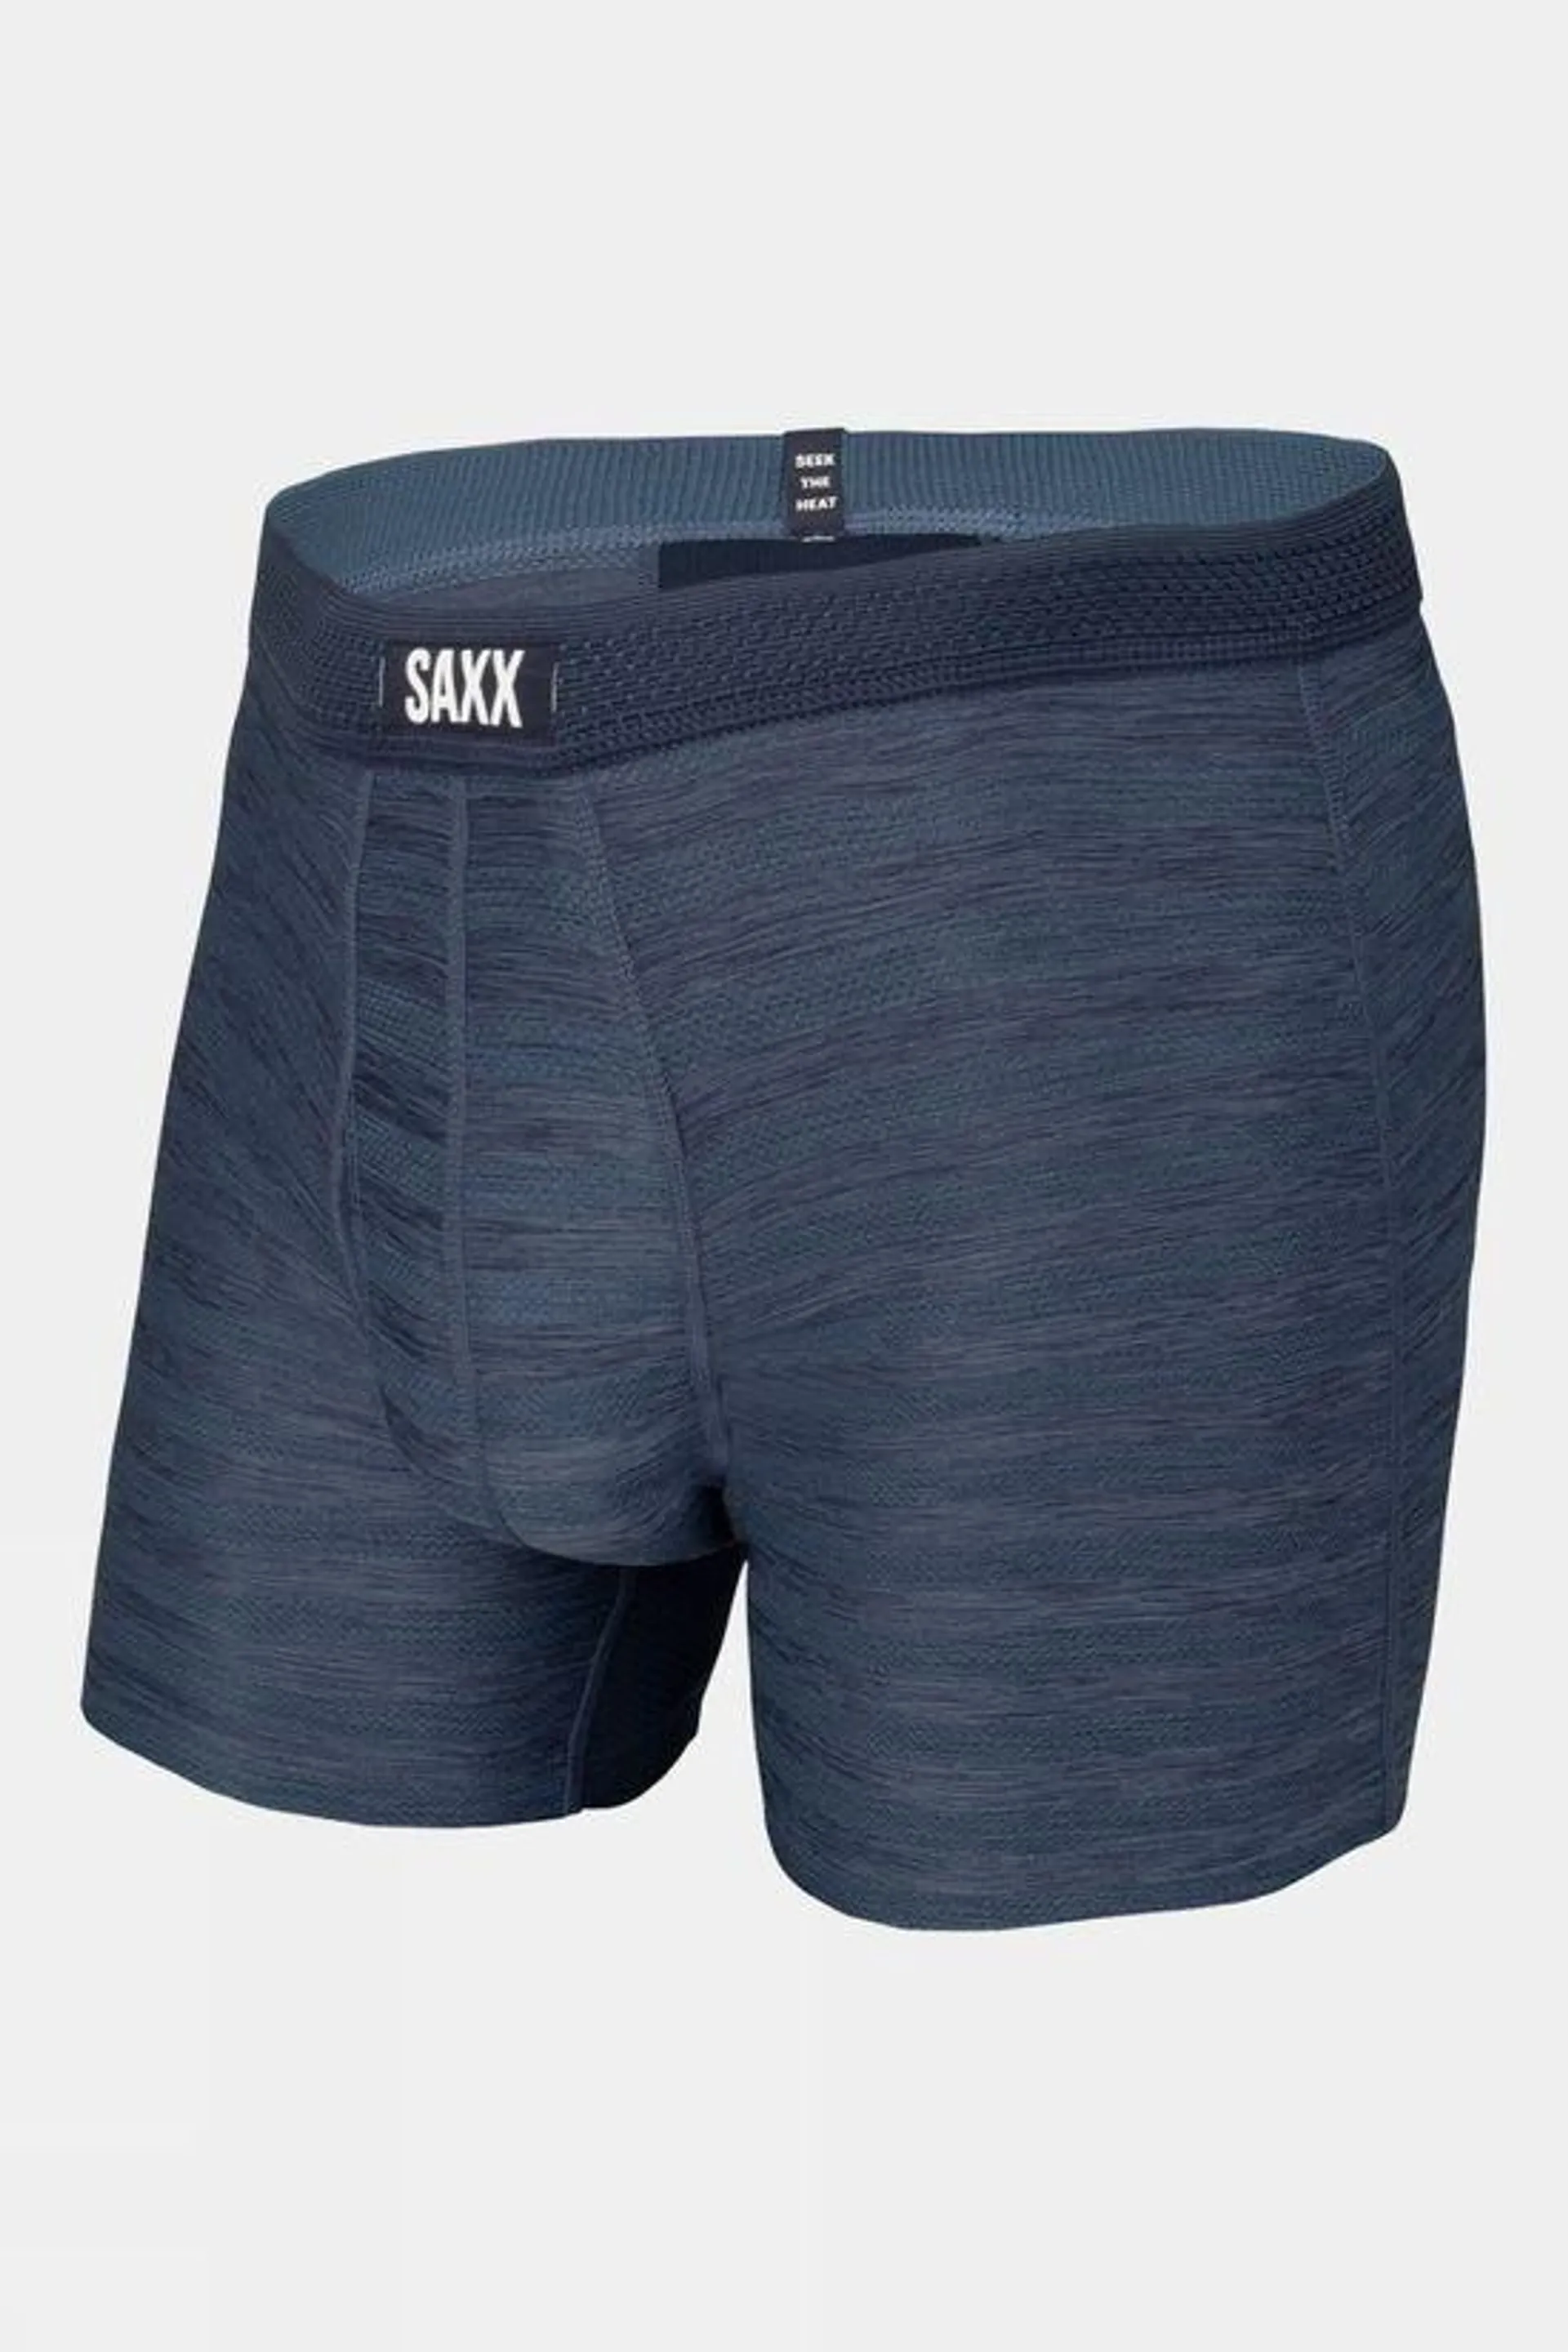 Saxx Mens Hot Shot Boxer Brief